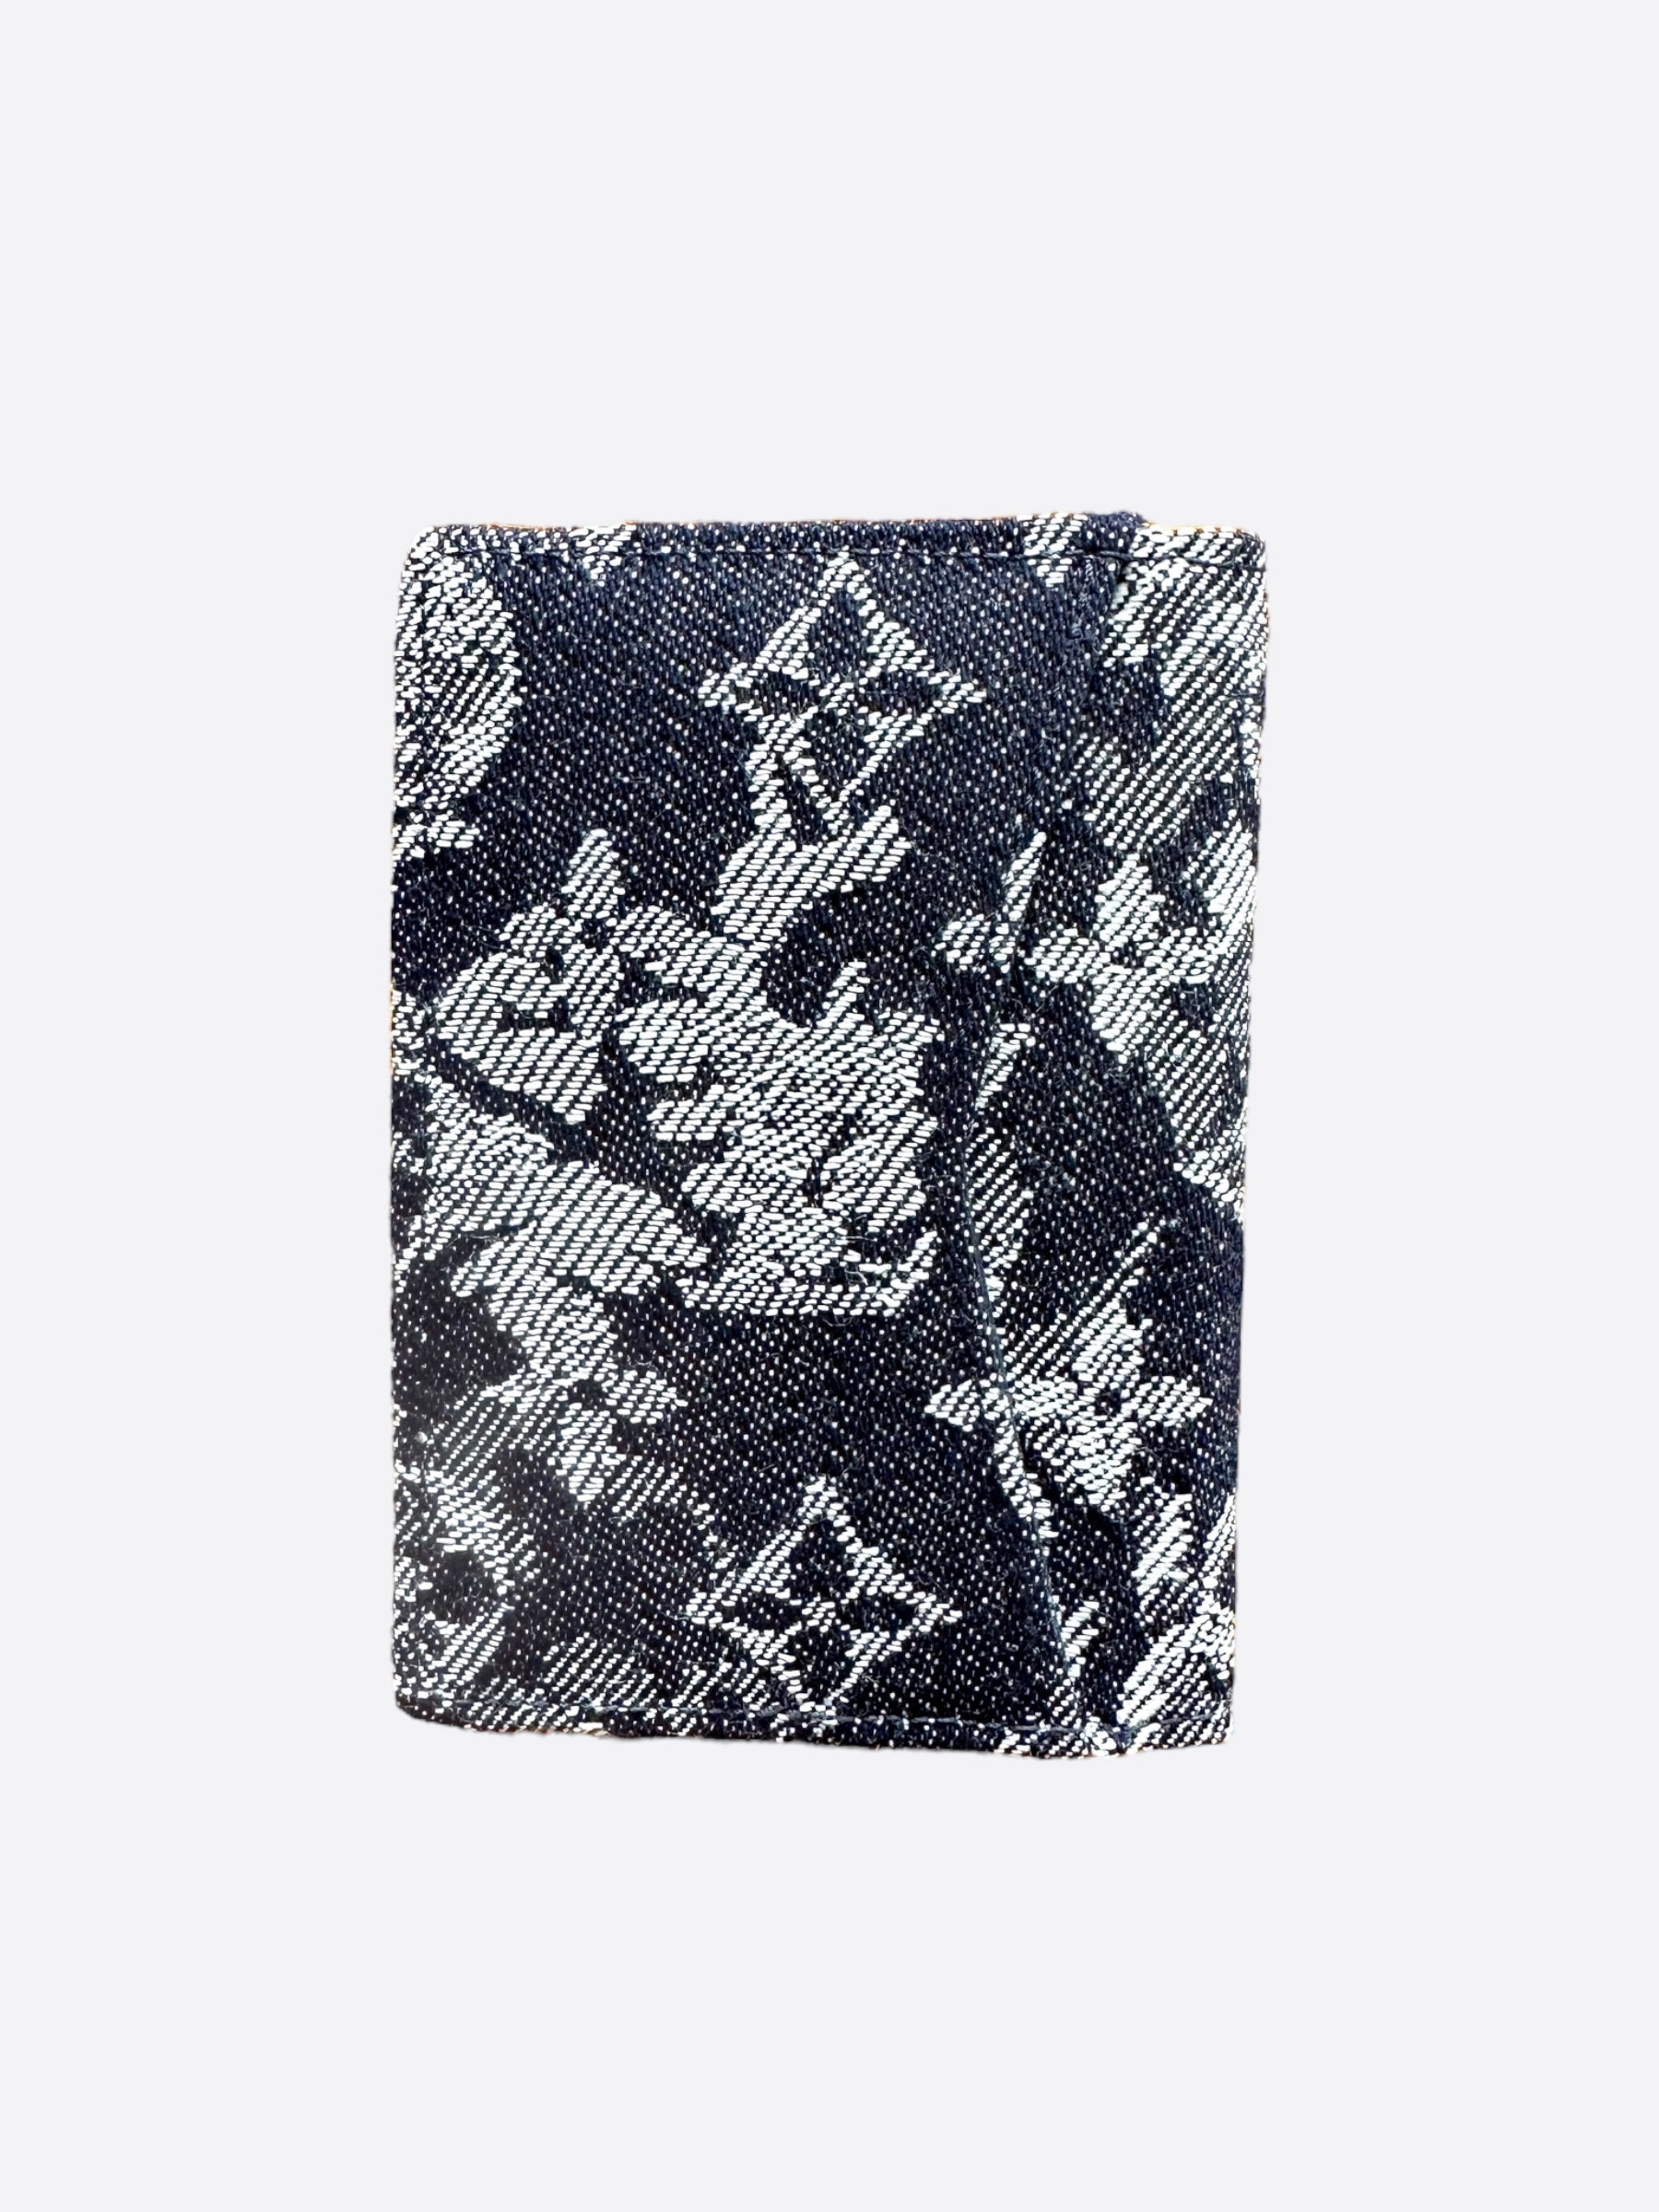 Louis Vuitton Monogram Tapestry Pocket Organizer (3 Card Slot)Louis Vuitton  Monogram Tapestry Pocket Organizer (3 Card Slot) - OFour